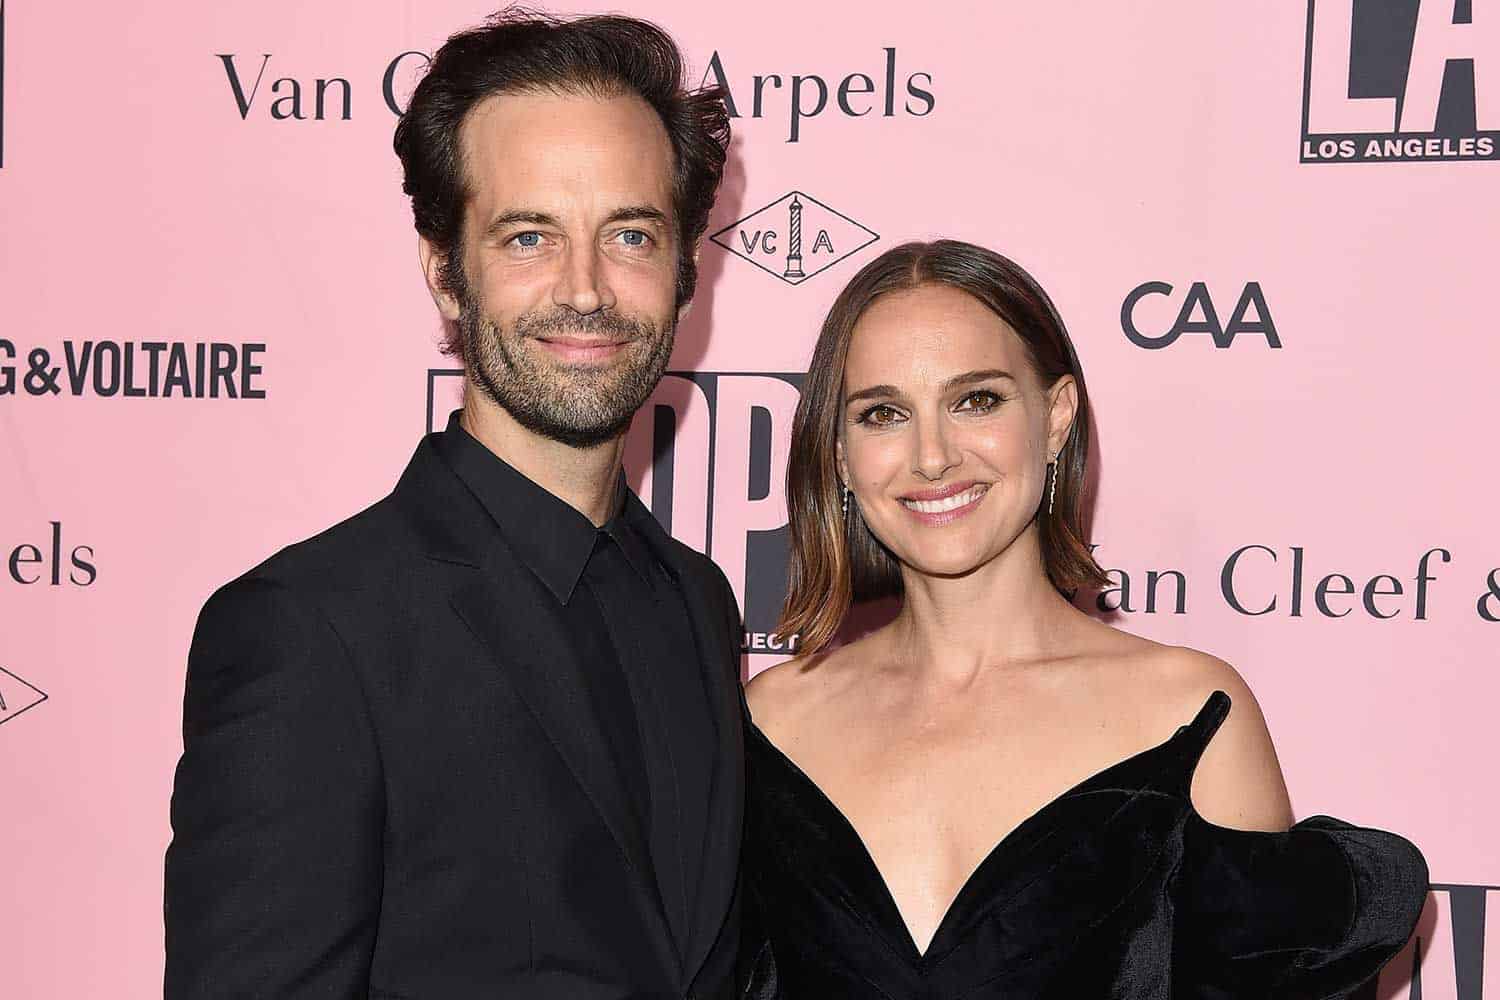 Who did Natalie Portman’s husband cheat with?